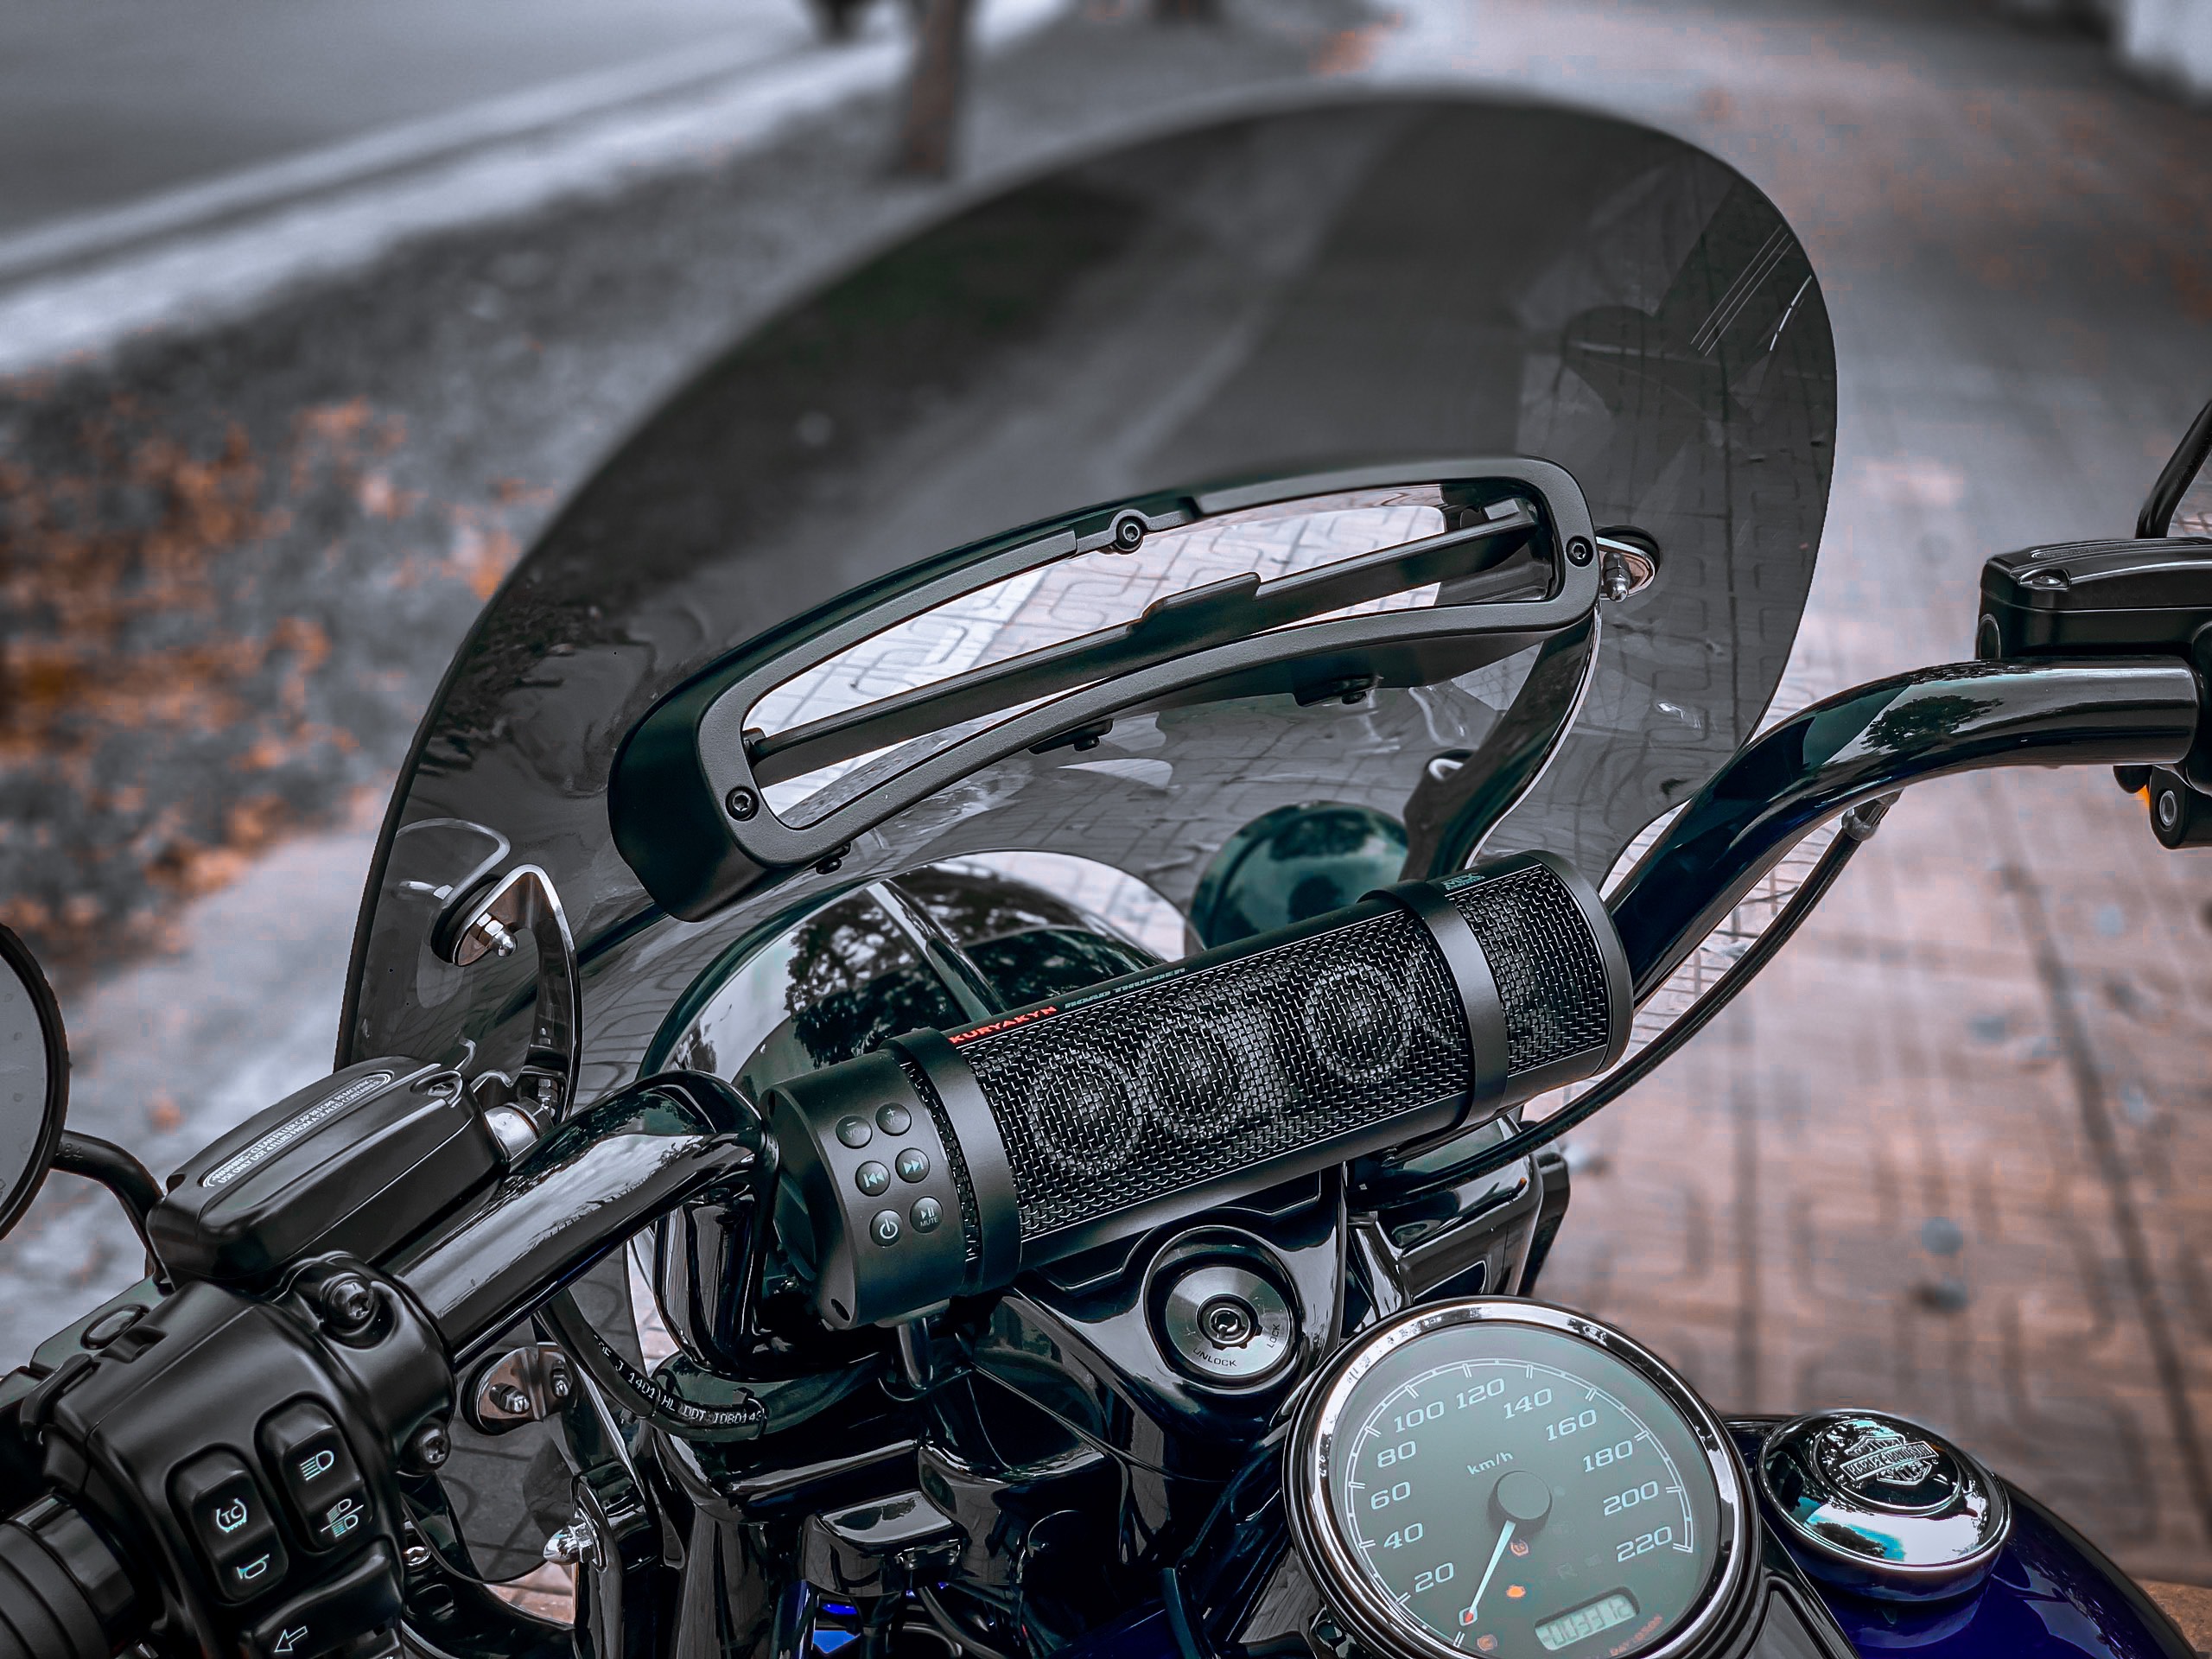 Harley Davidson RoadKing Special 2020